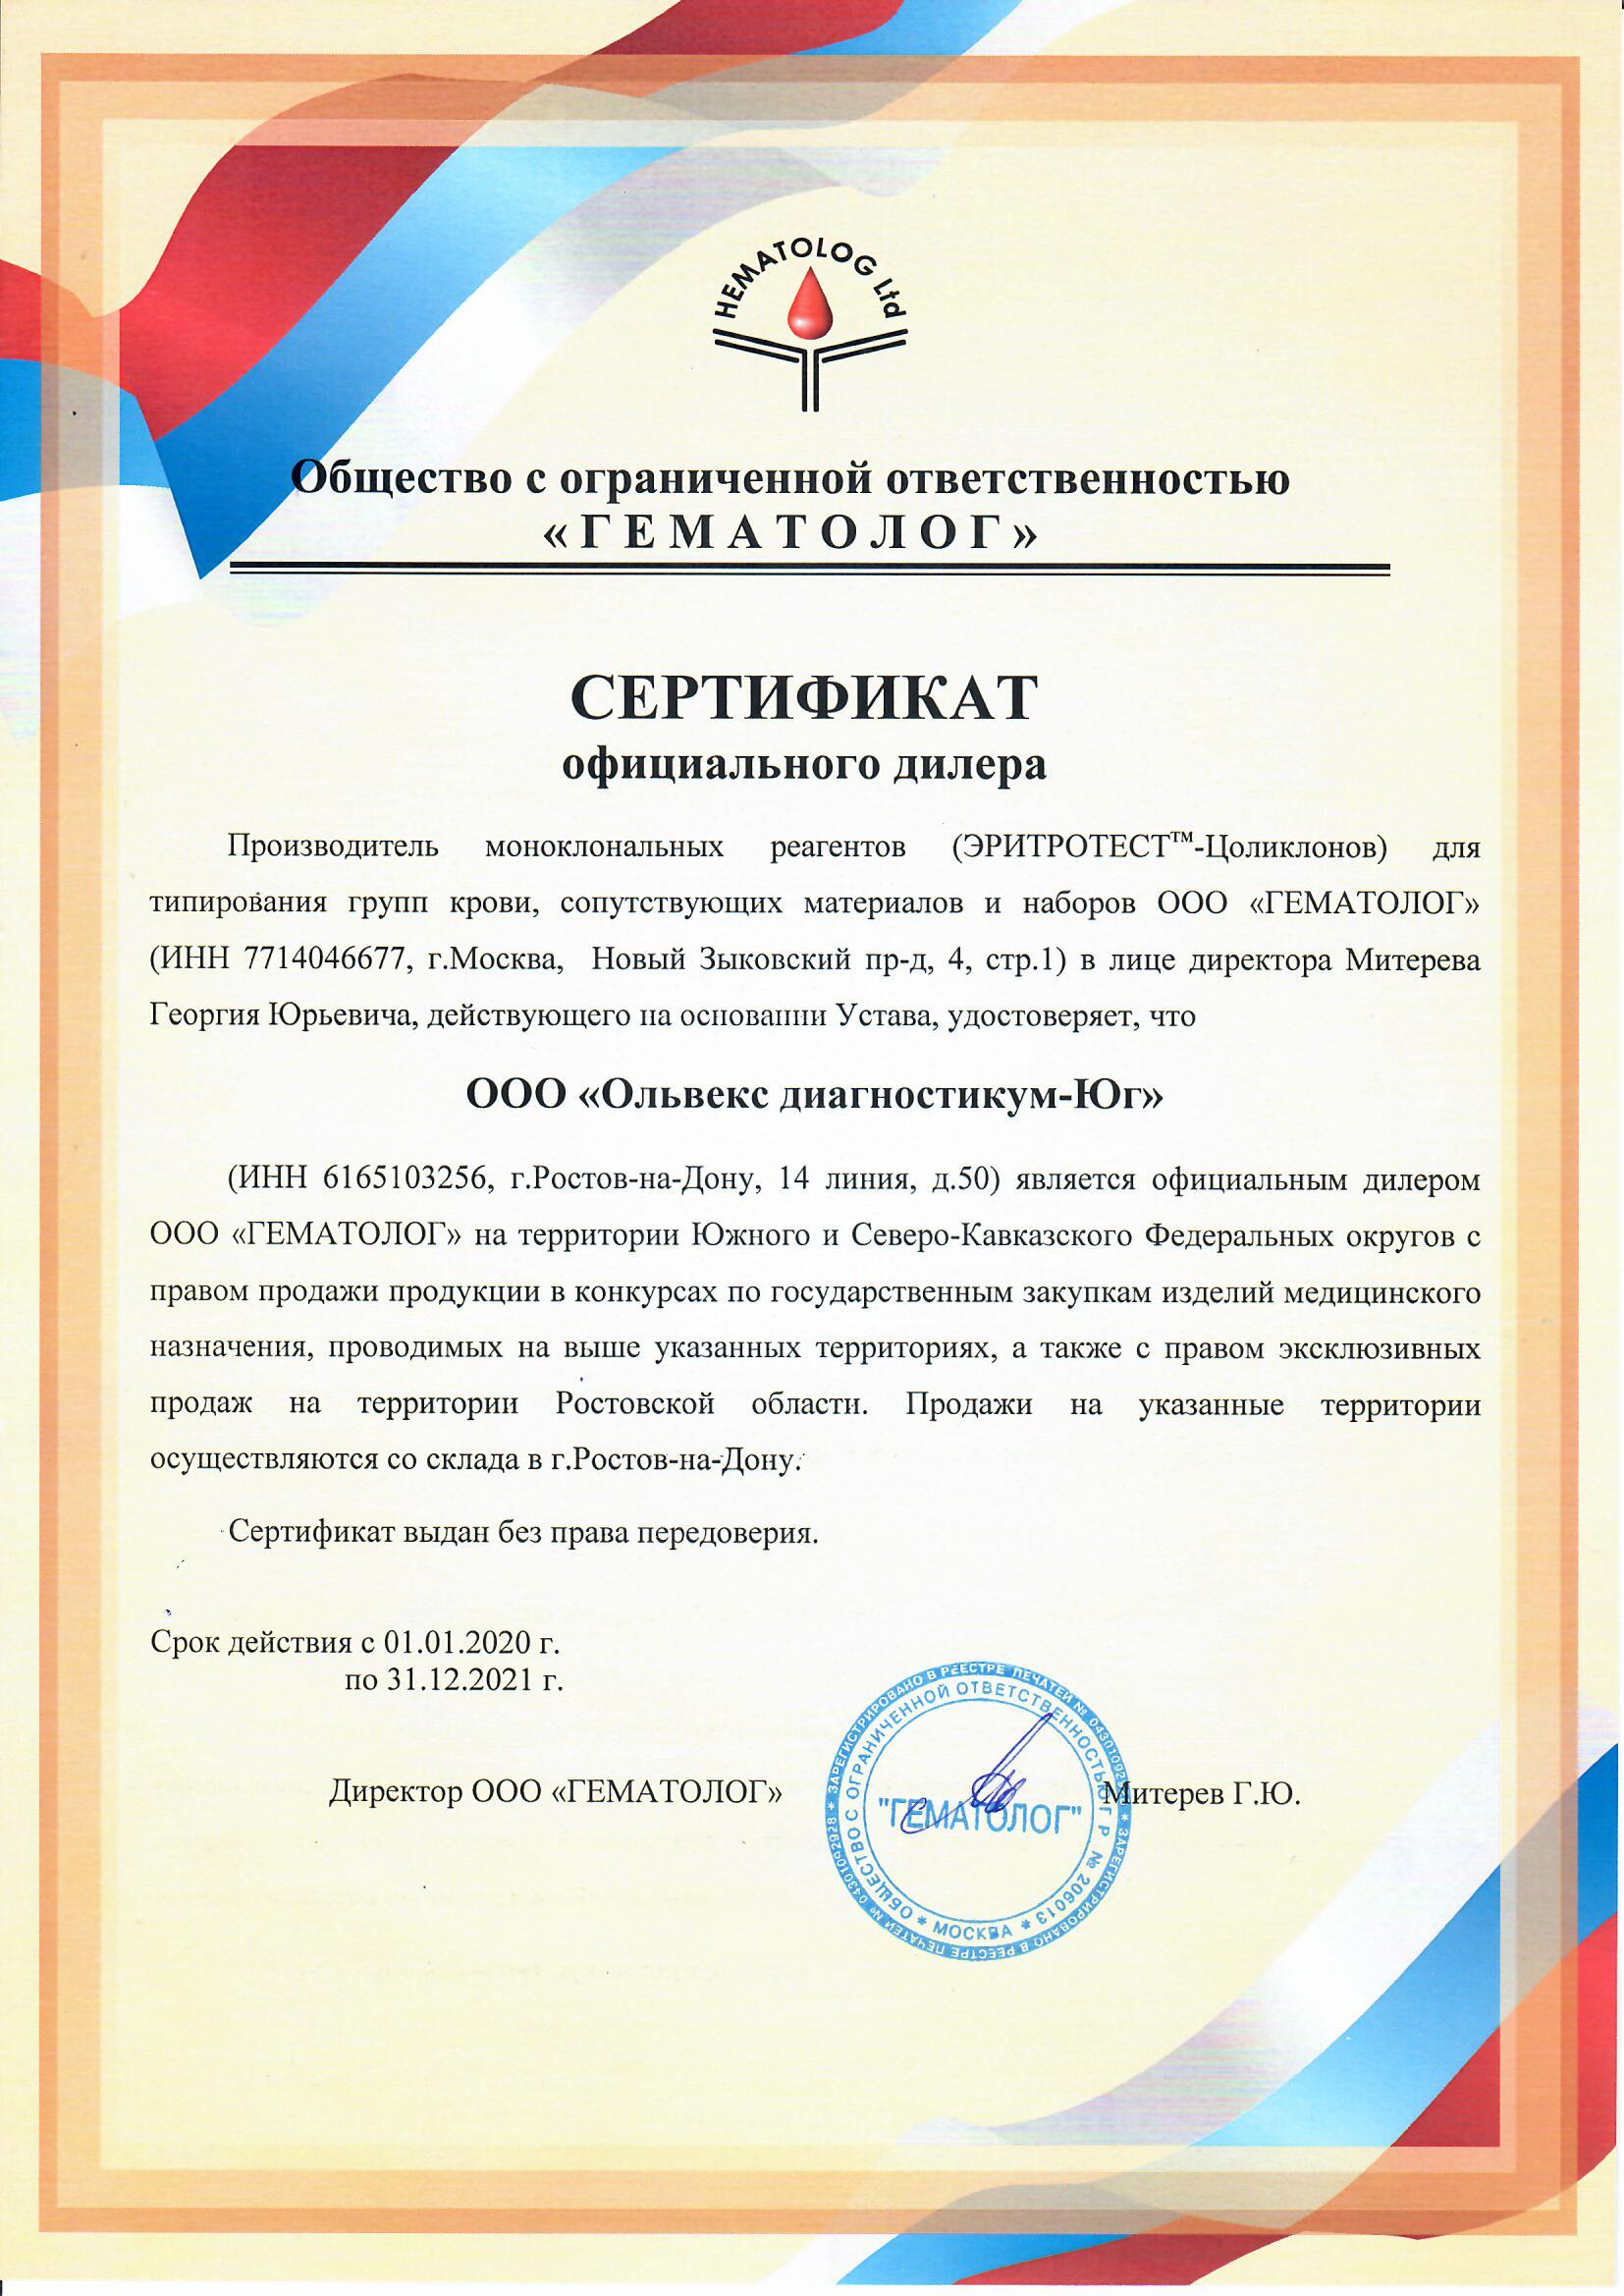 Сертификат ГЕМАТОЛОГ